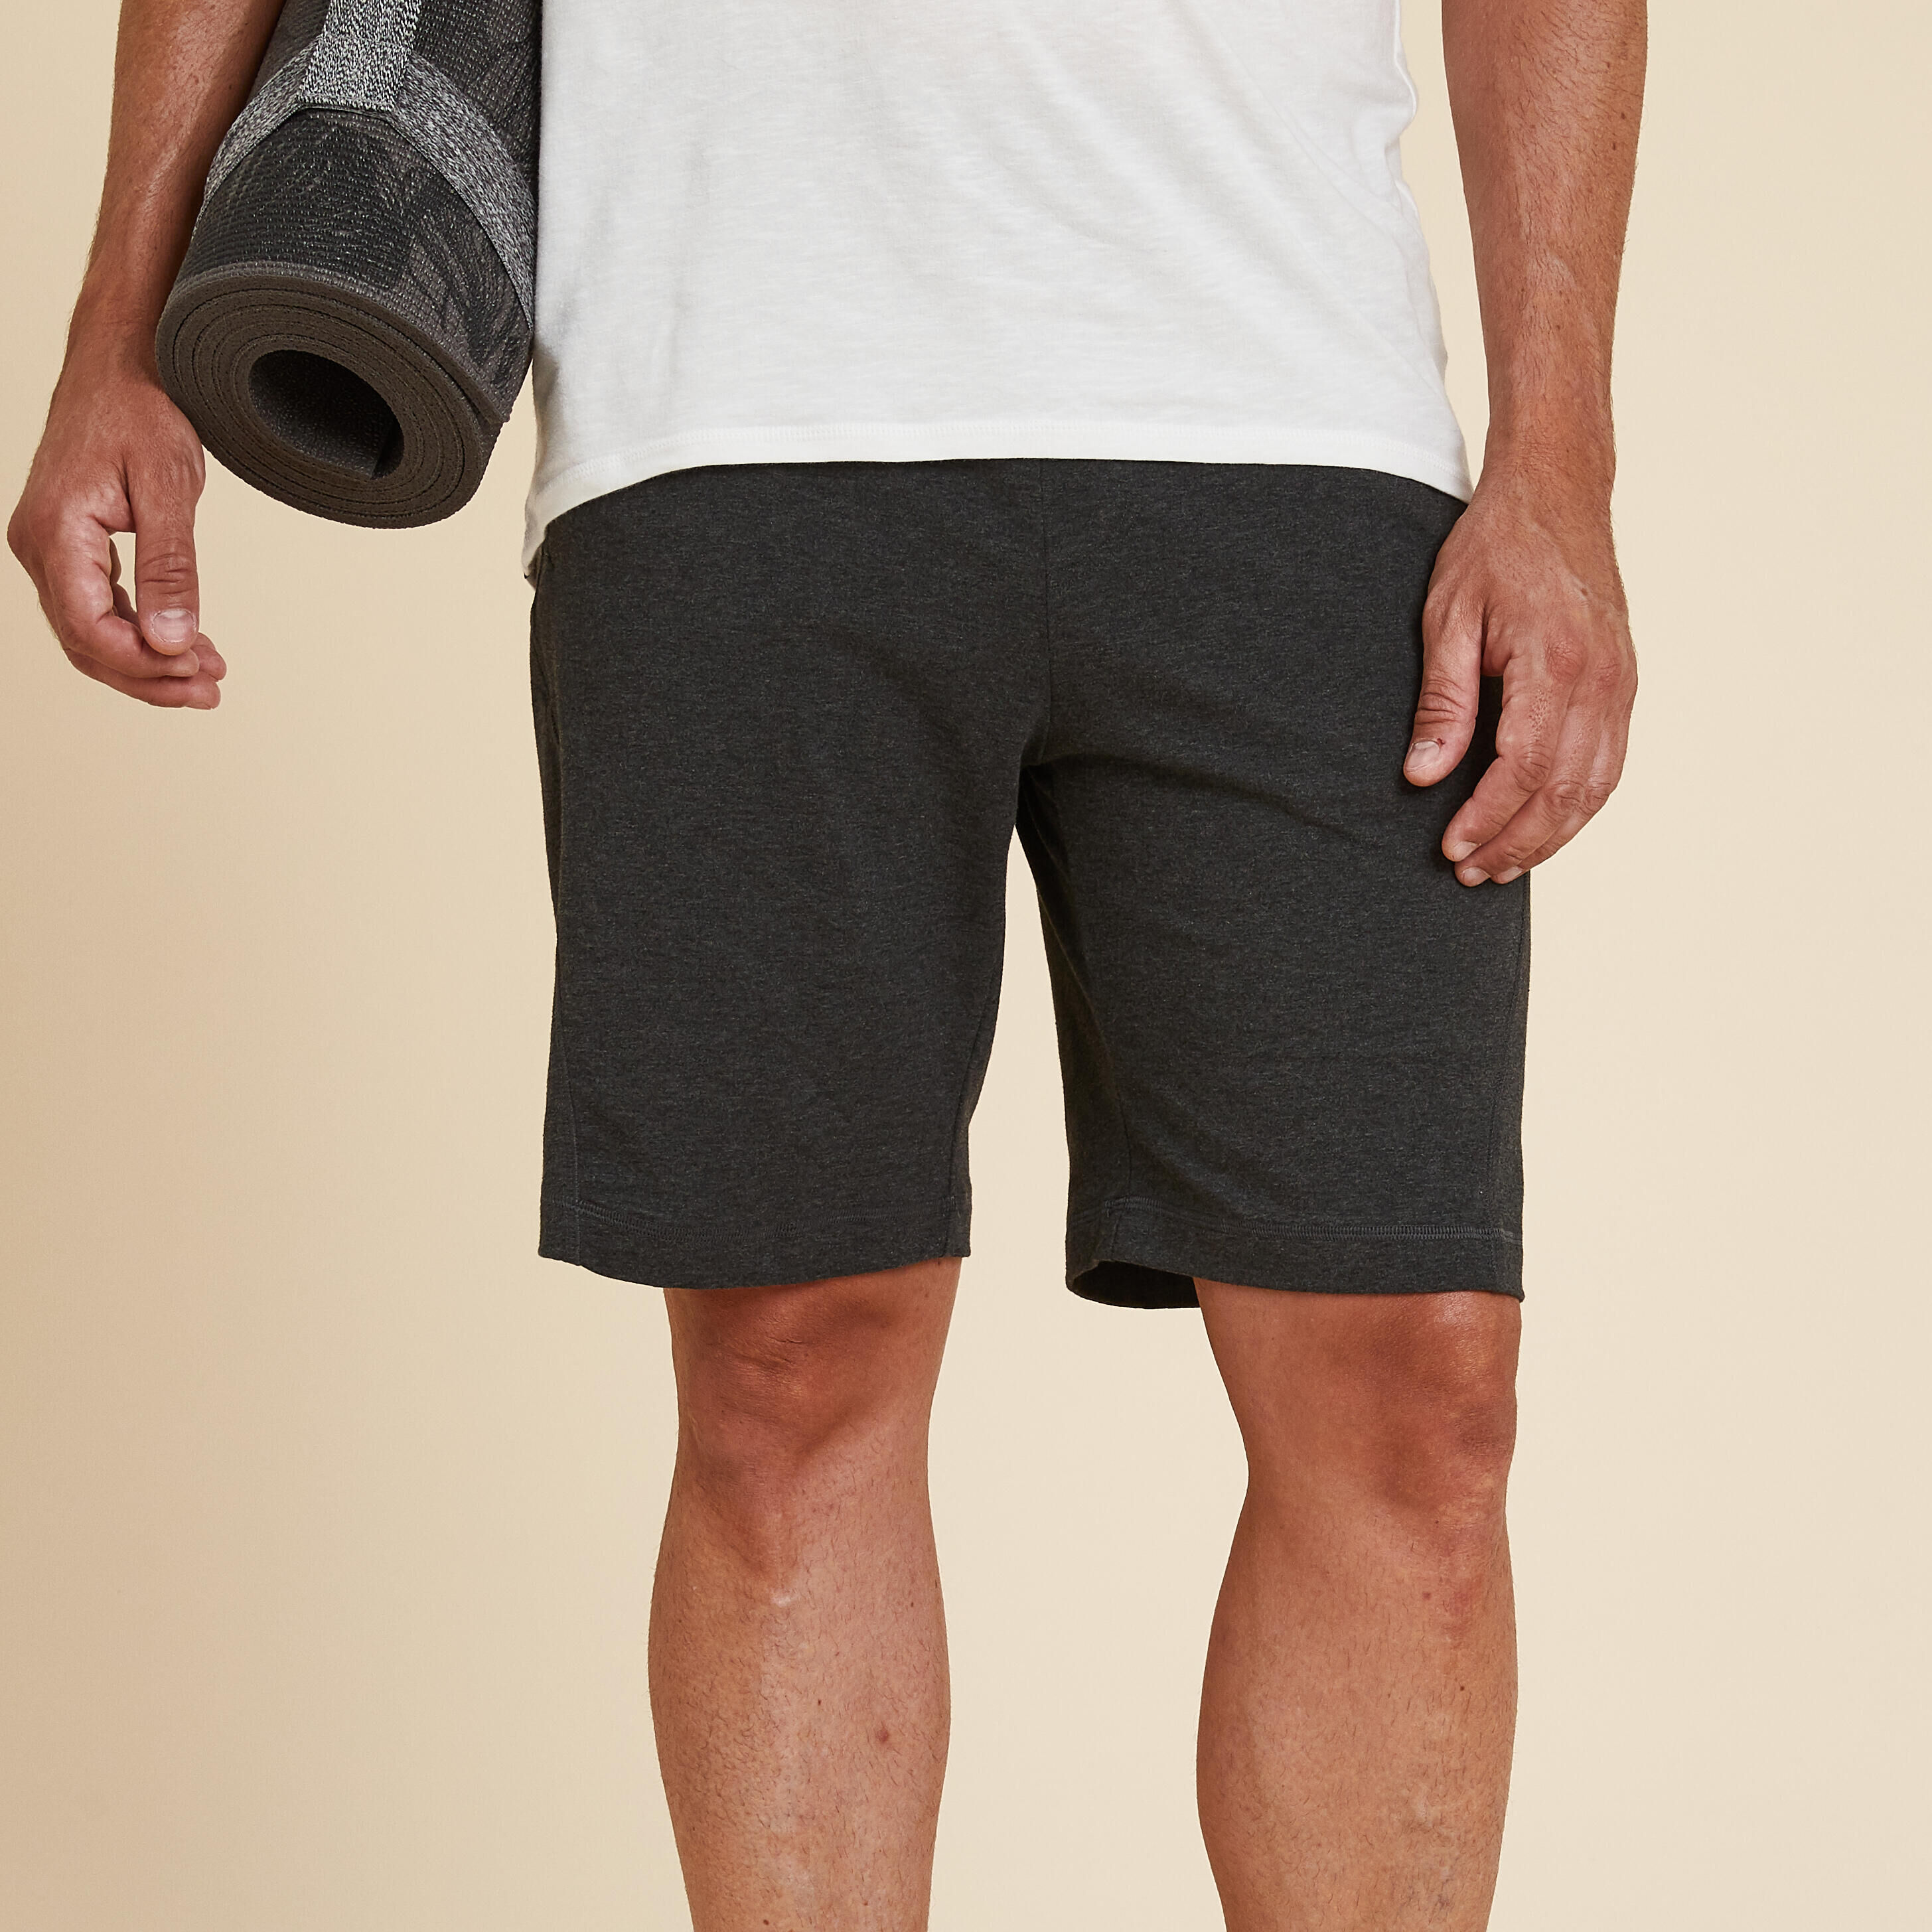 KIMJALY Men's Cotton Yoga Shorts Grey